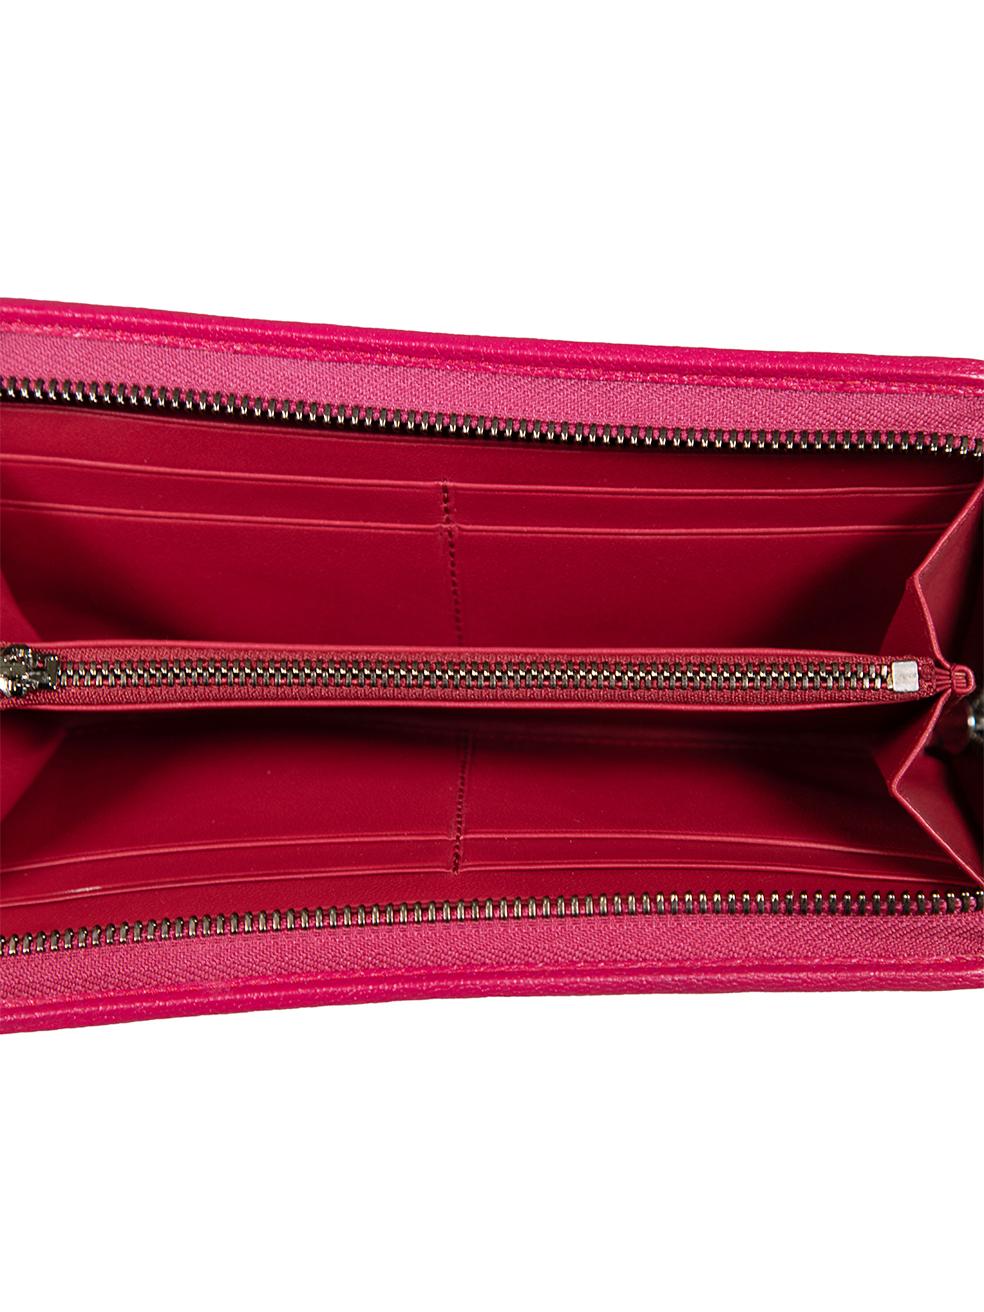 Loewe Red Leather Amazona Zip Around Long Wallet For Sale 1